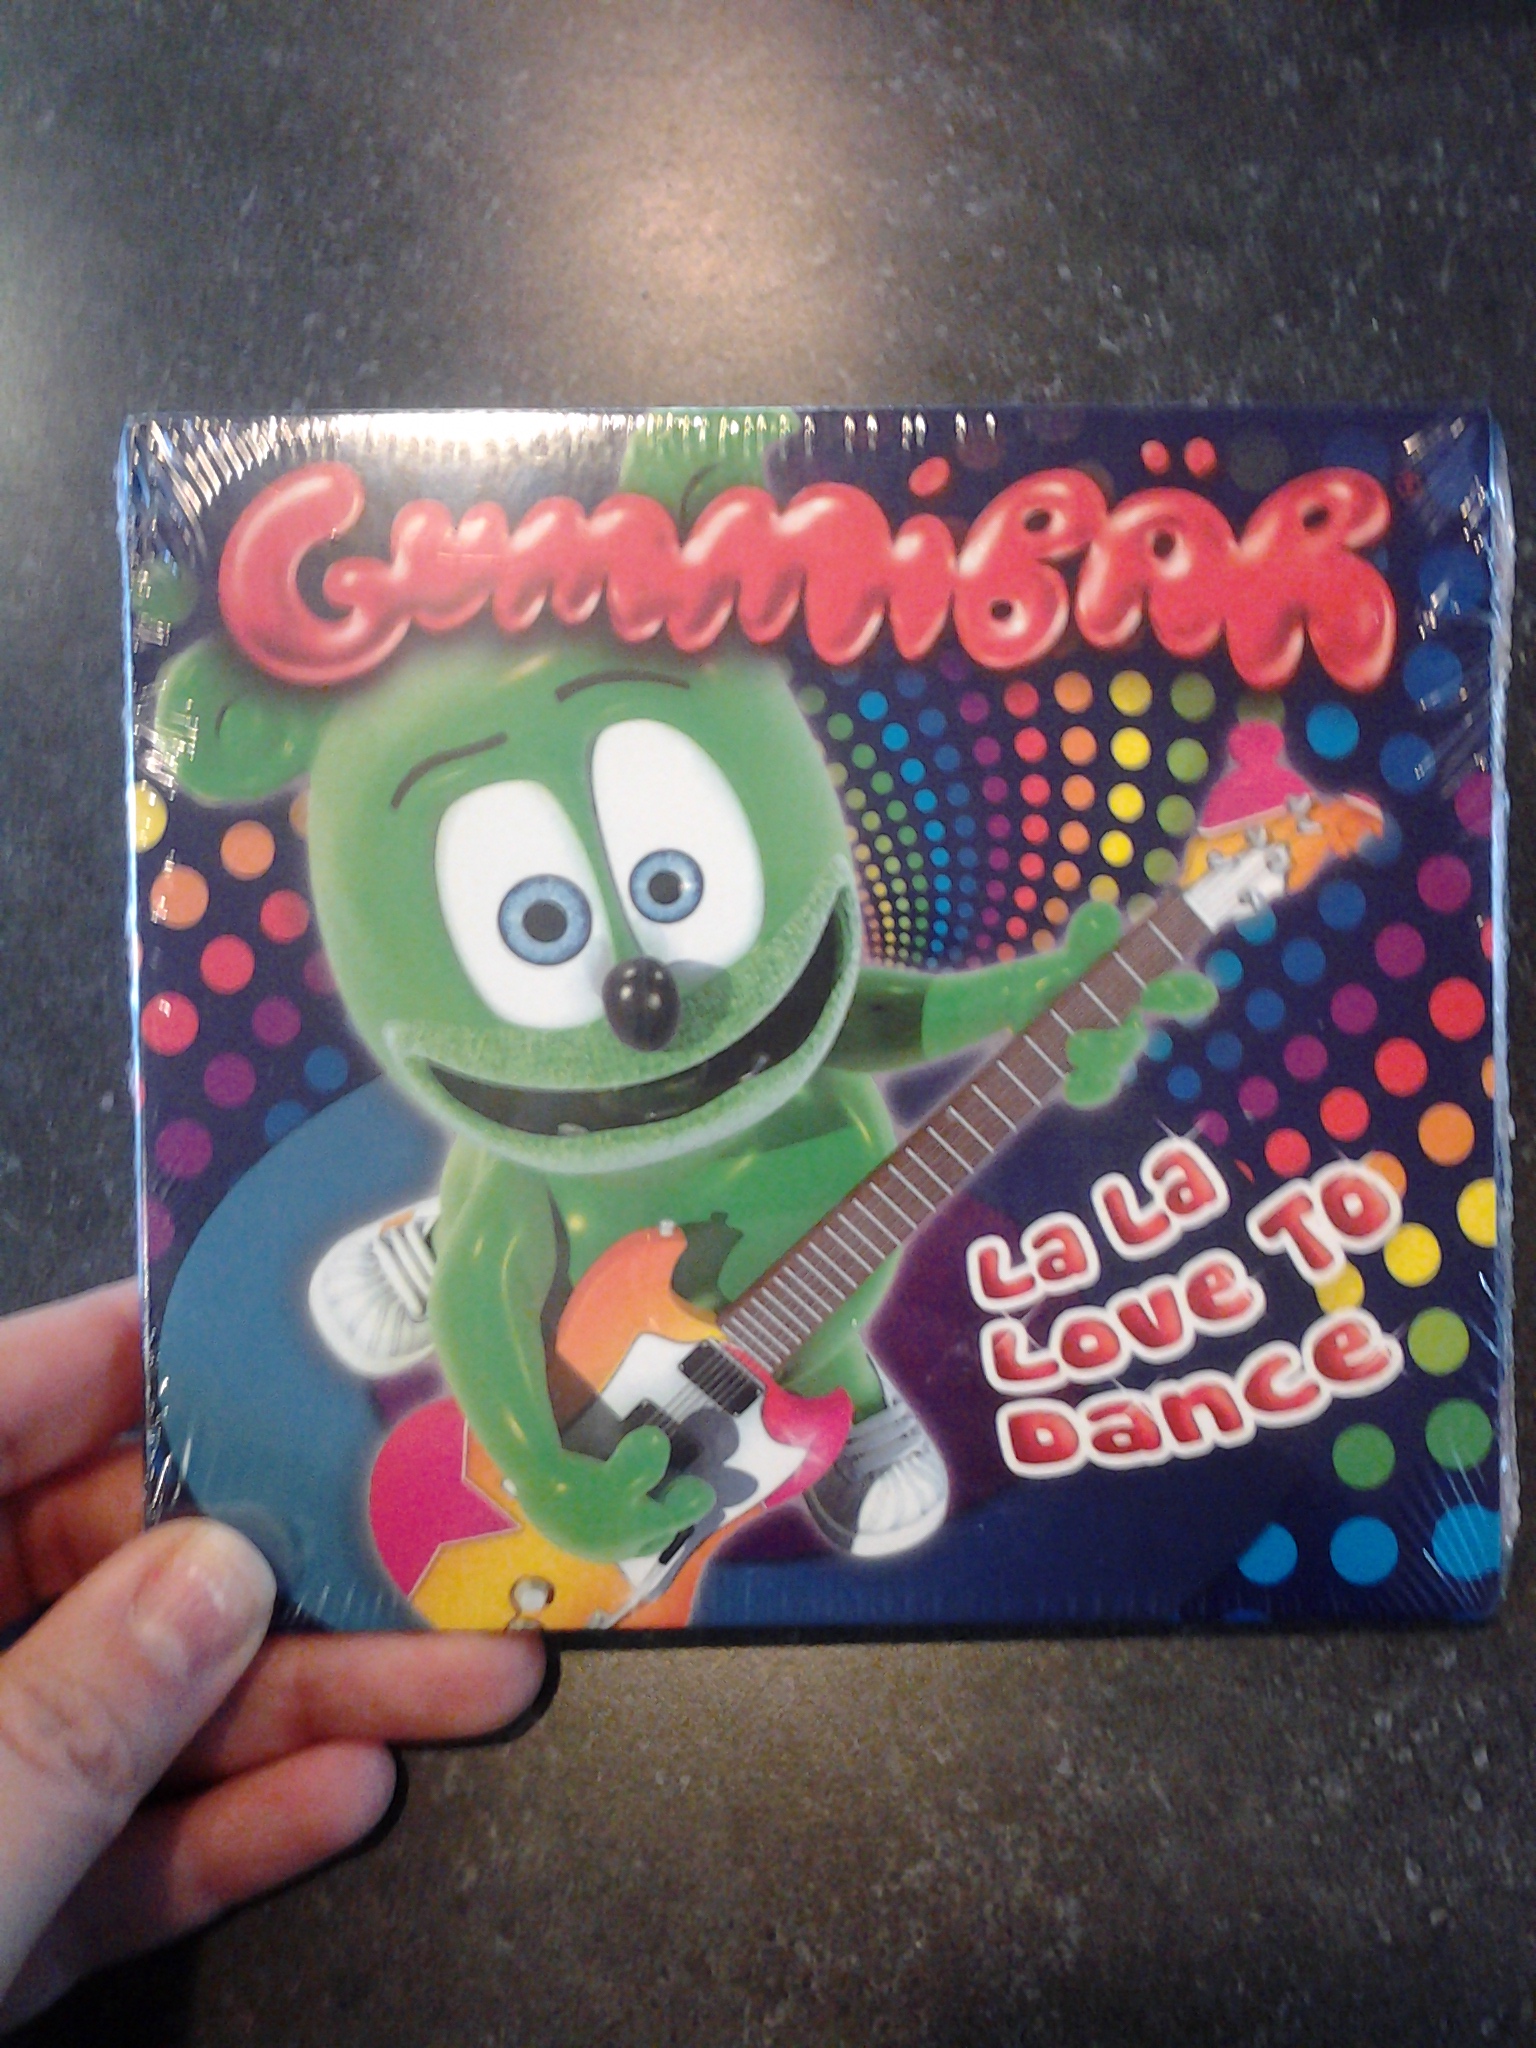 MISSION GUMMY is ON! NEW Gummy Bear Show Compilation - Gummibär